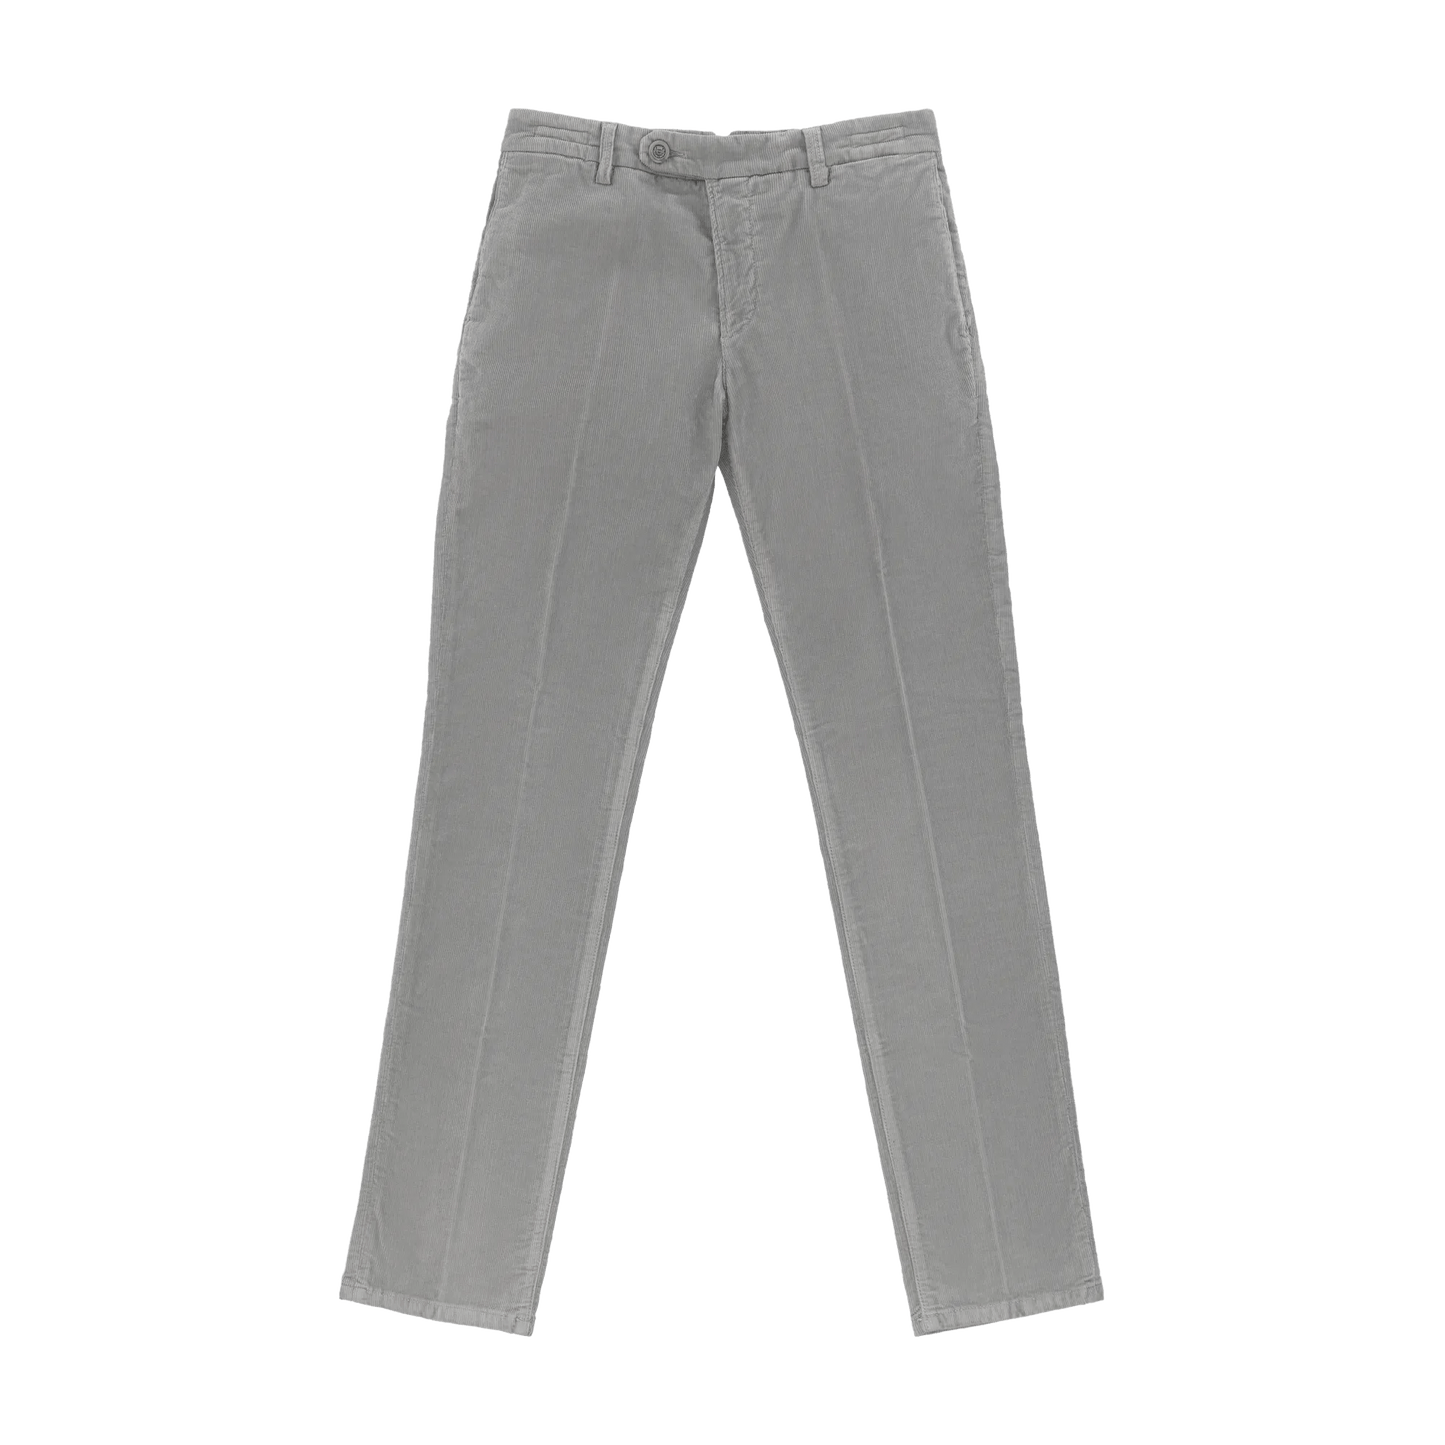 Richard J. Brown Slim - Fit Stretch - Cotton Velvet Trousers in Grey - SARTALE